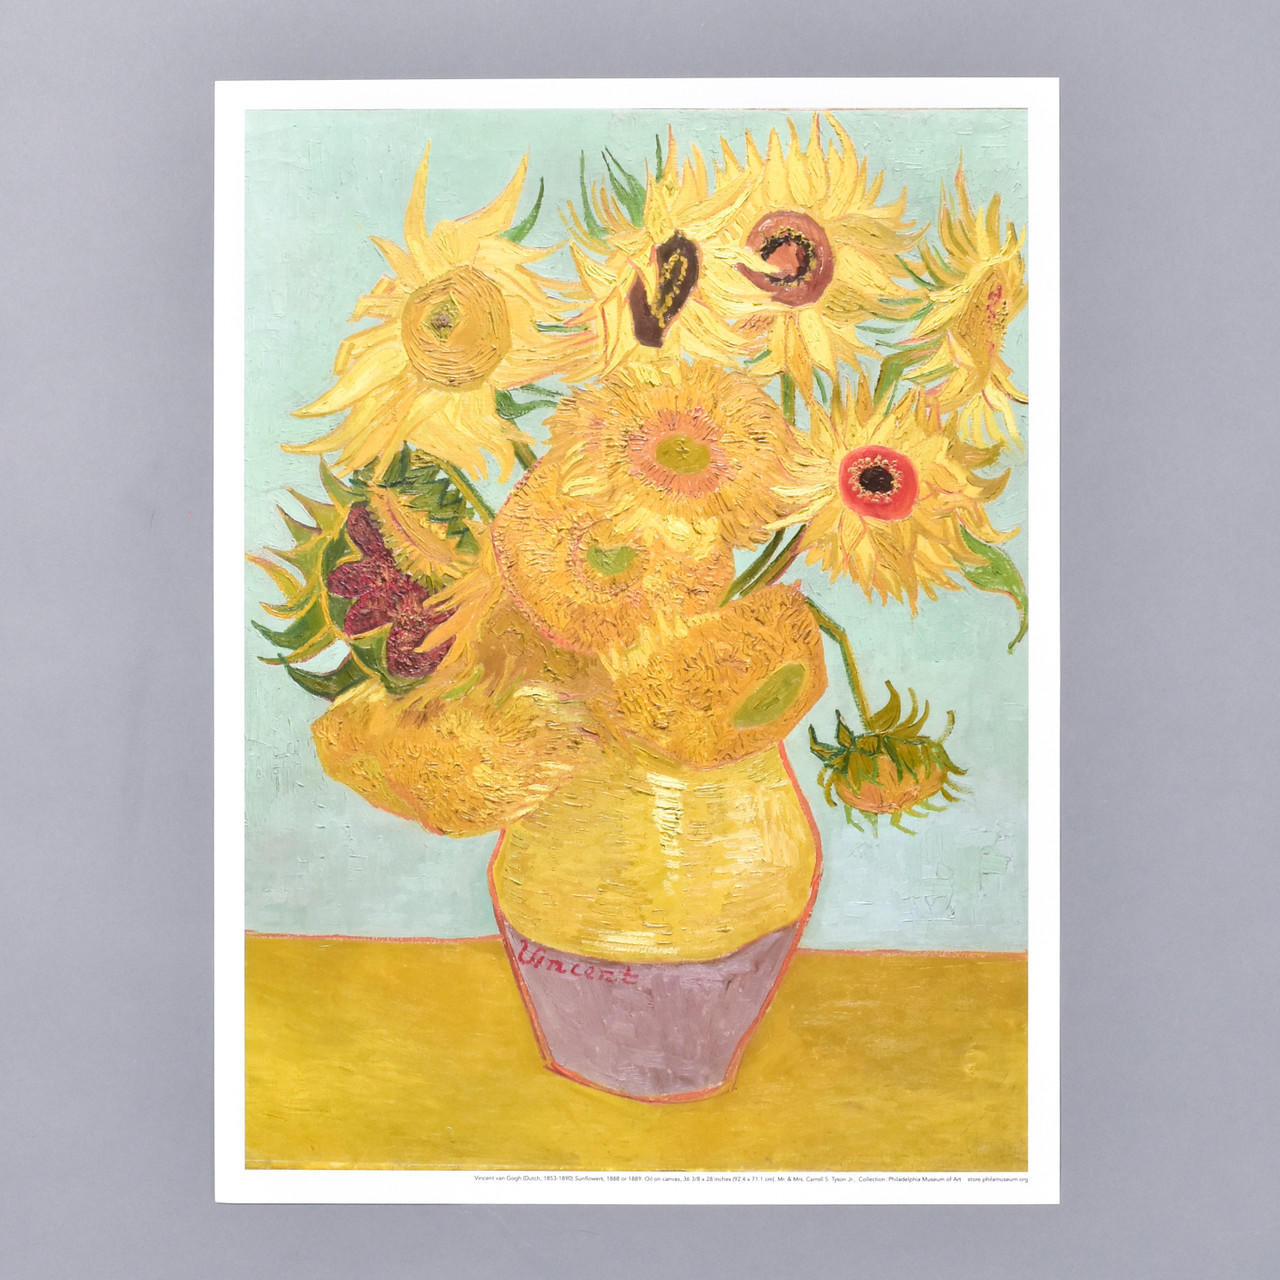 Day Pak'r Sunflowers, Eastpak x Van Gogh Museum® - Van Gogh Museum